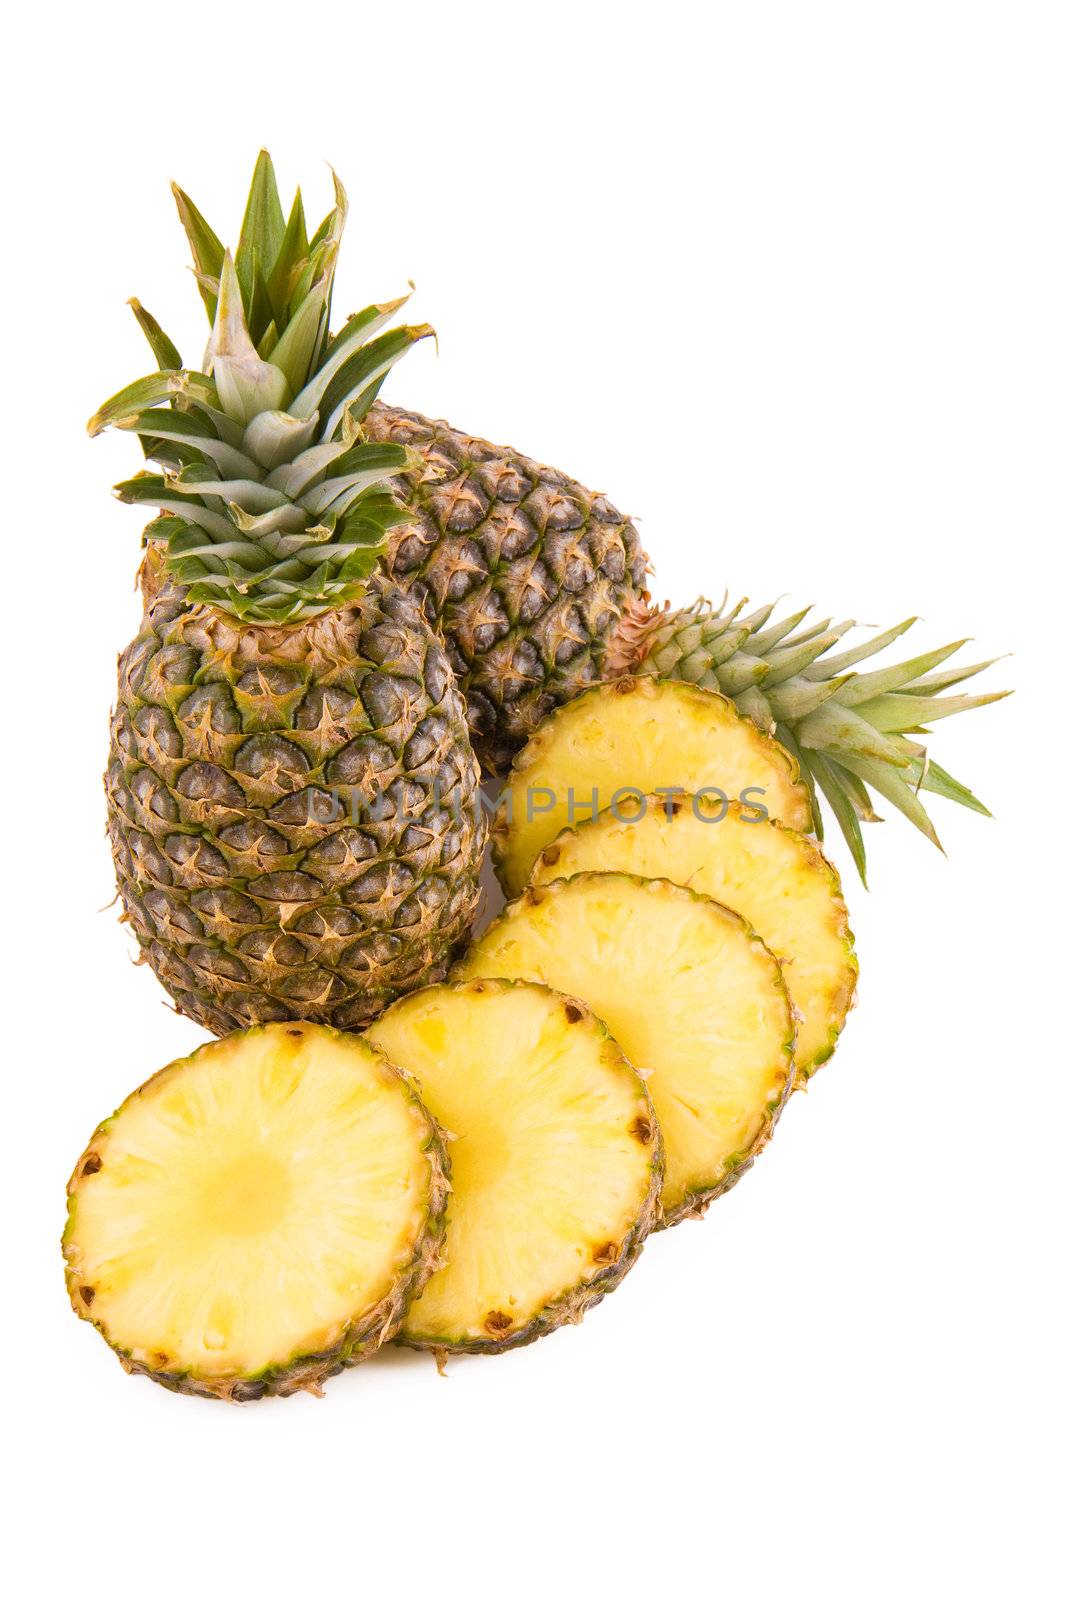 Pineapple fruits by Gbuglok